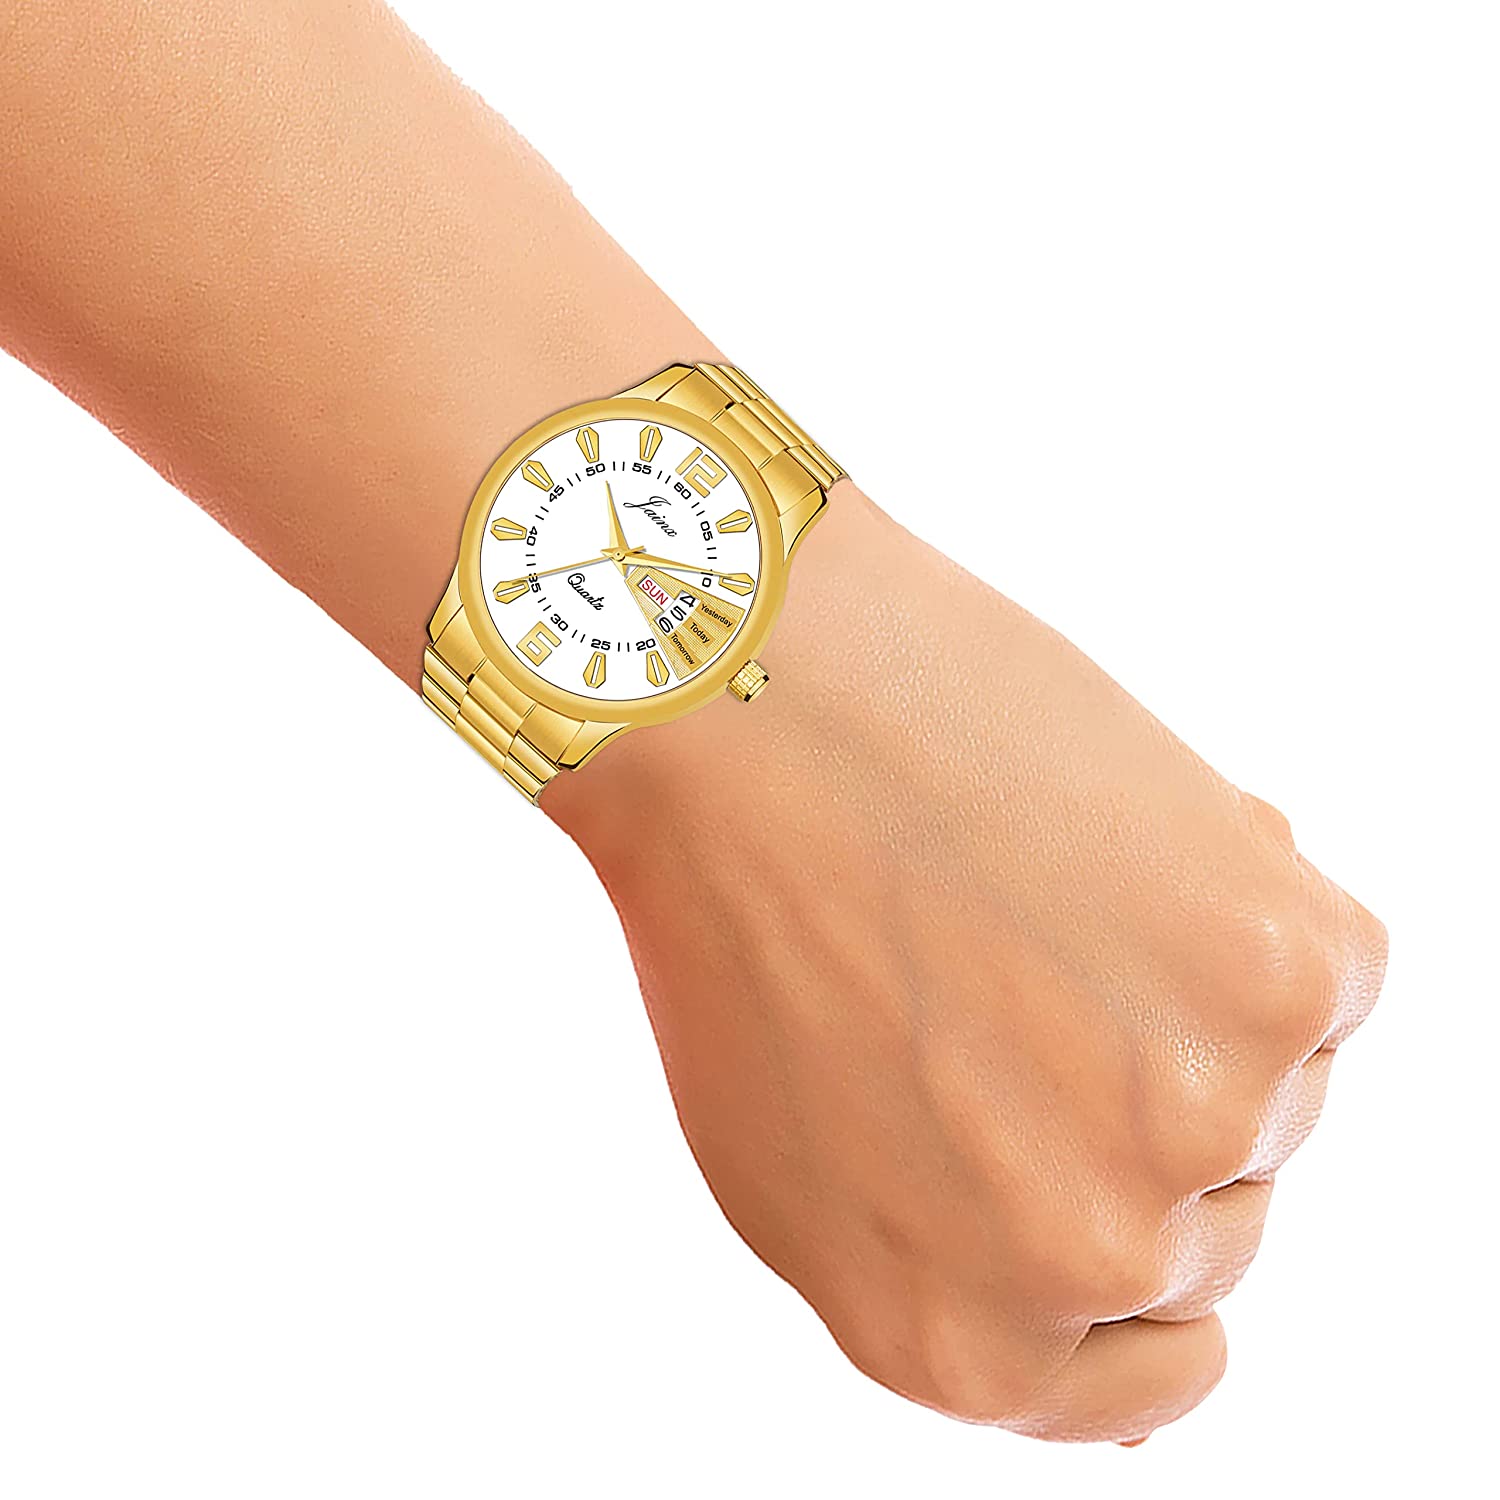 Premium Day and Date Function Golden Chain Analog Watch - For Men JM1163 - Jainx Store